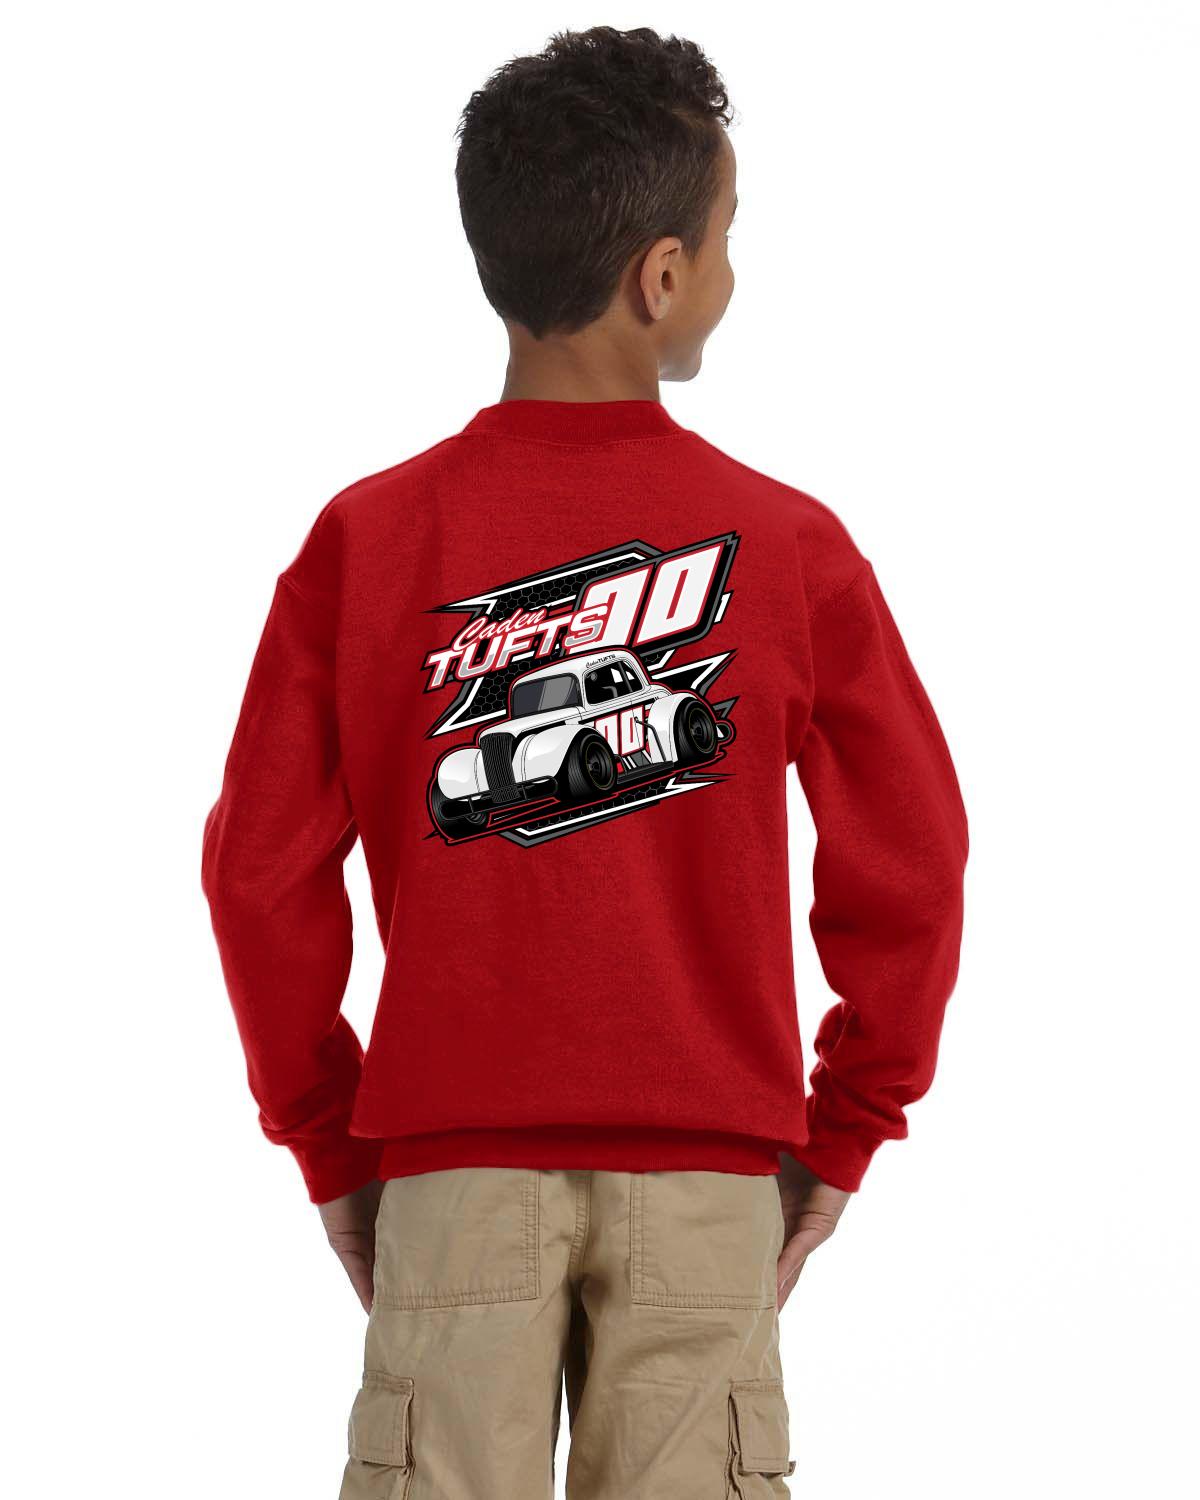 Caden Tufts Legends Racing Youth Crew Neck Sweater